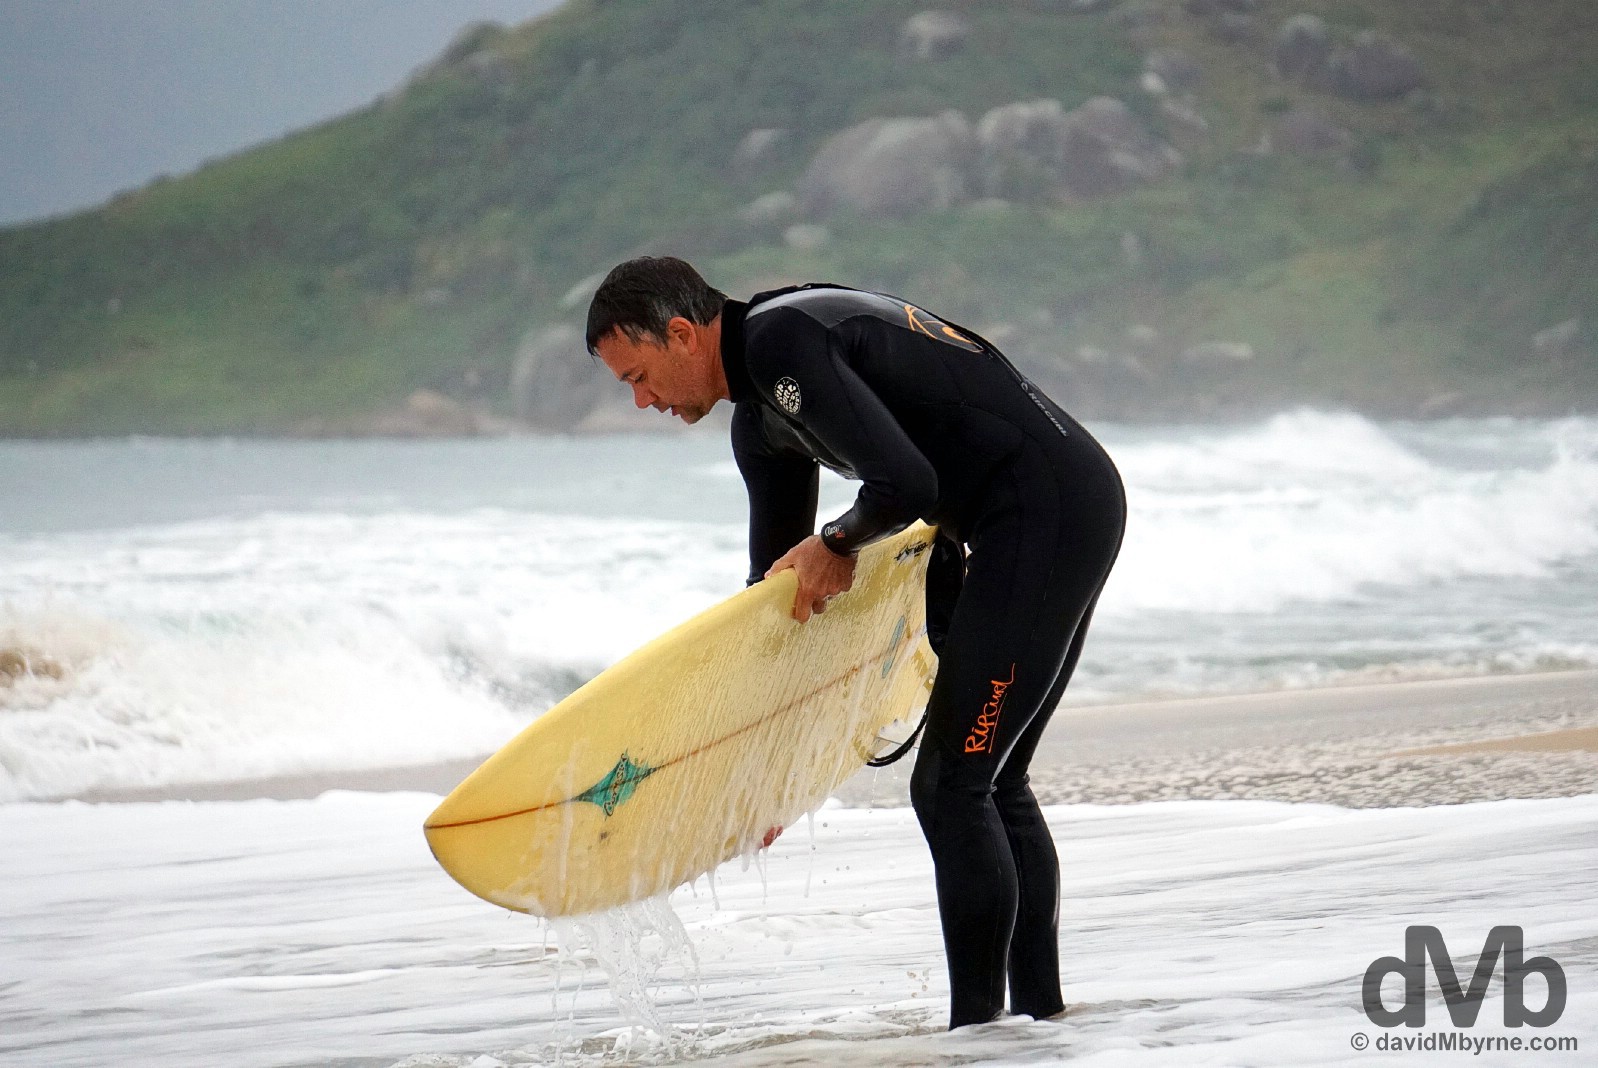 A surfer on Praia Mole on Ilah Santa Catarina, Brazil. September 17, 2015.